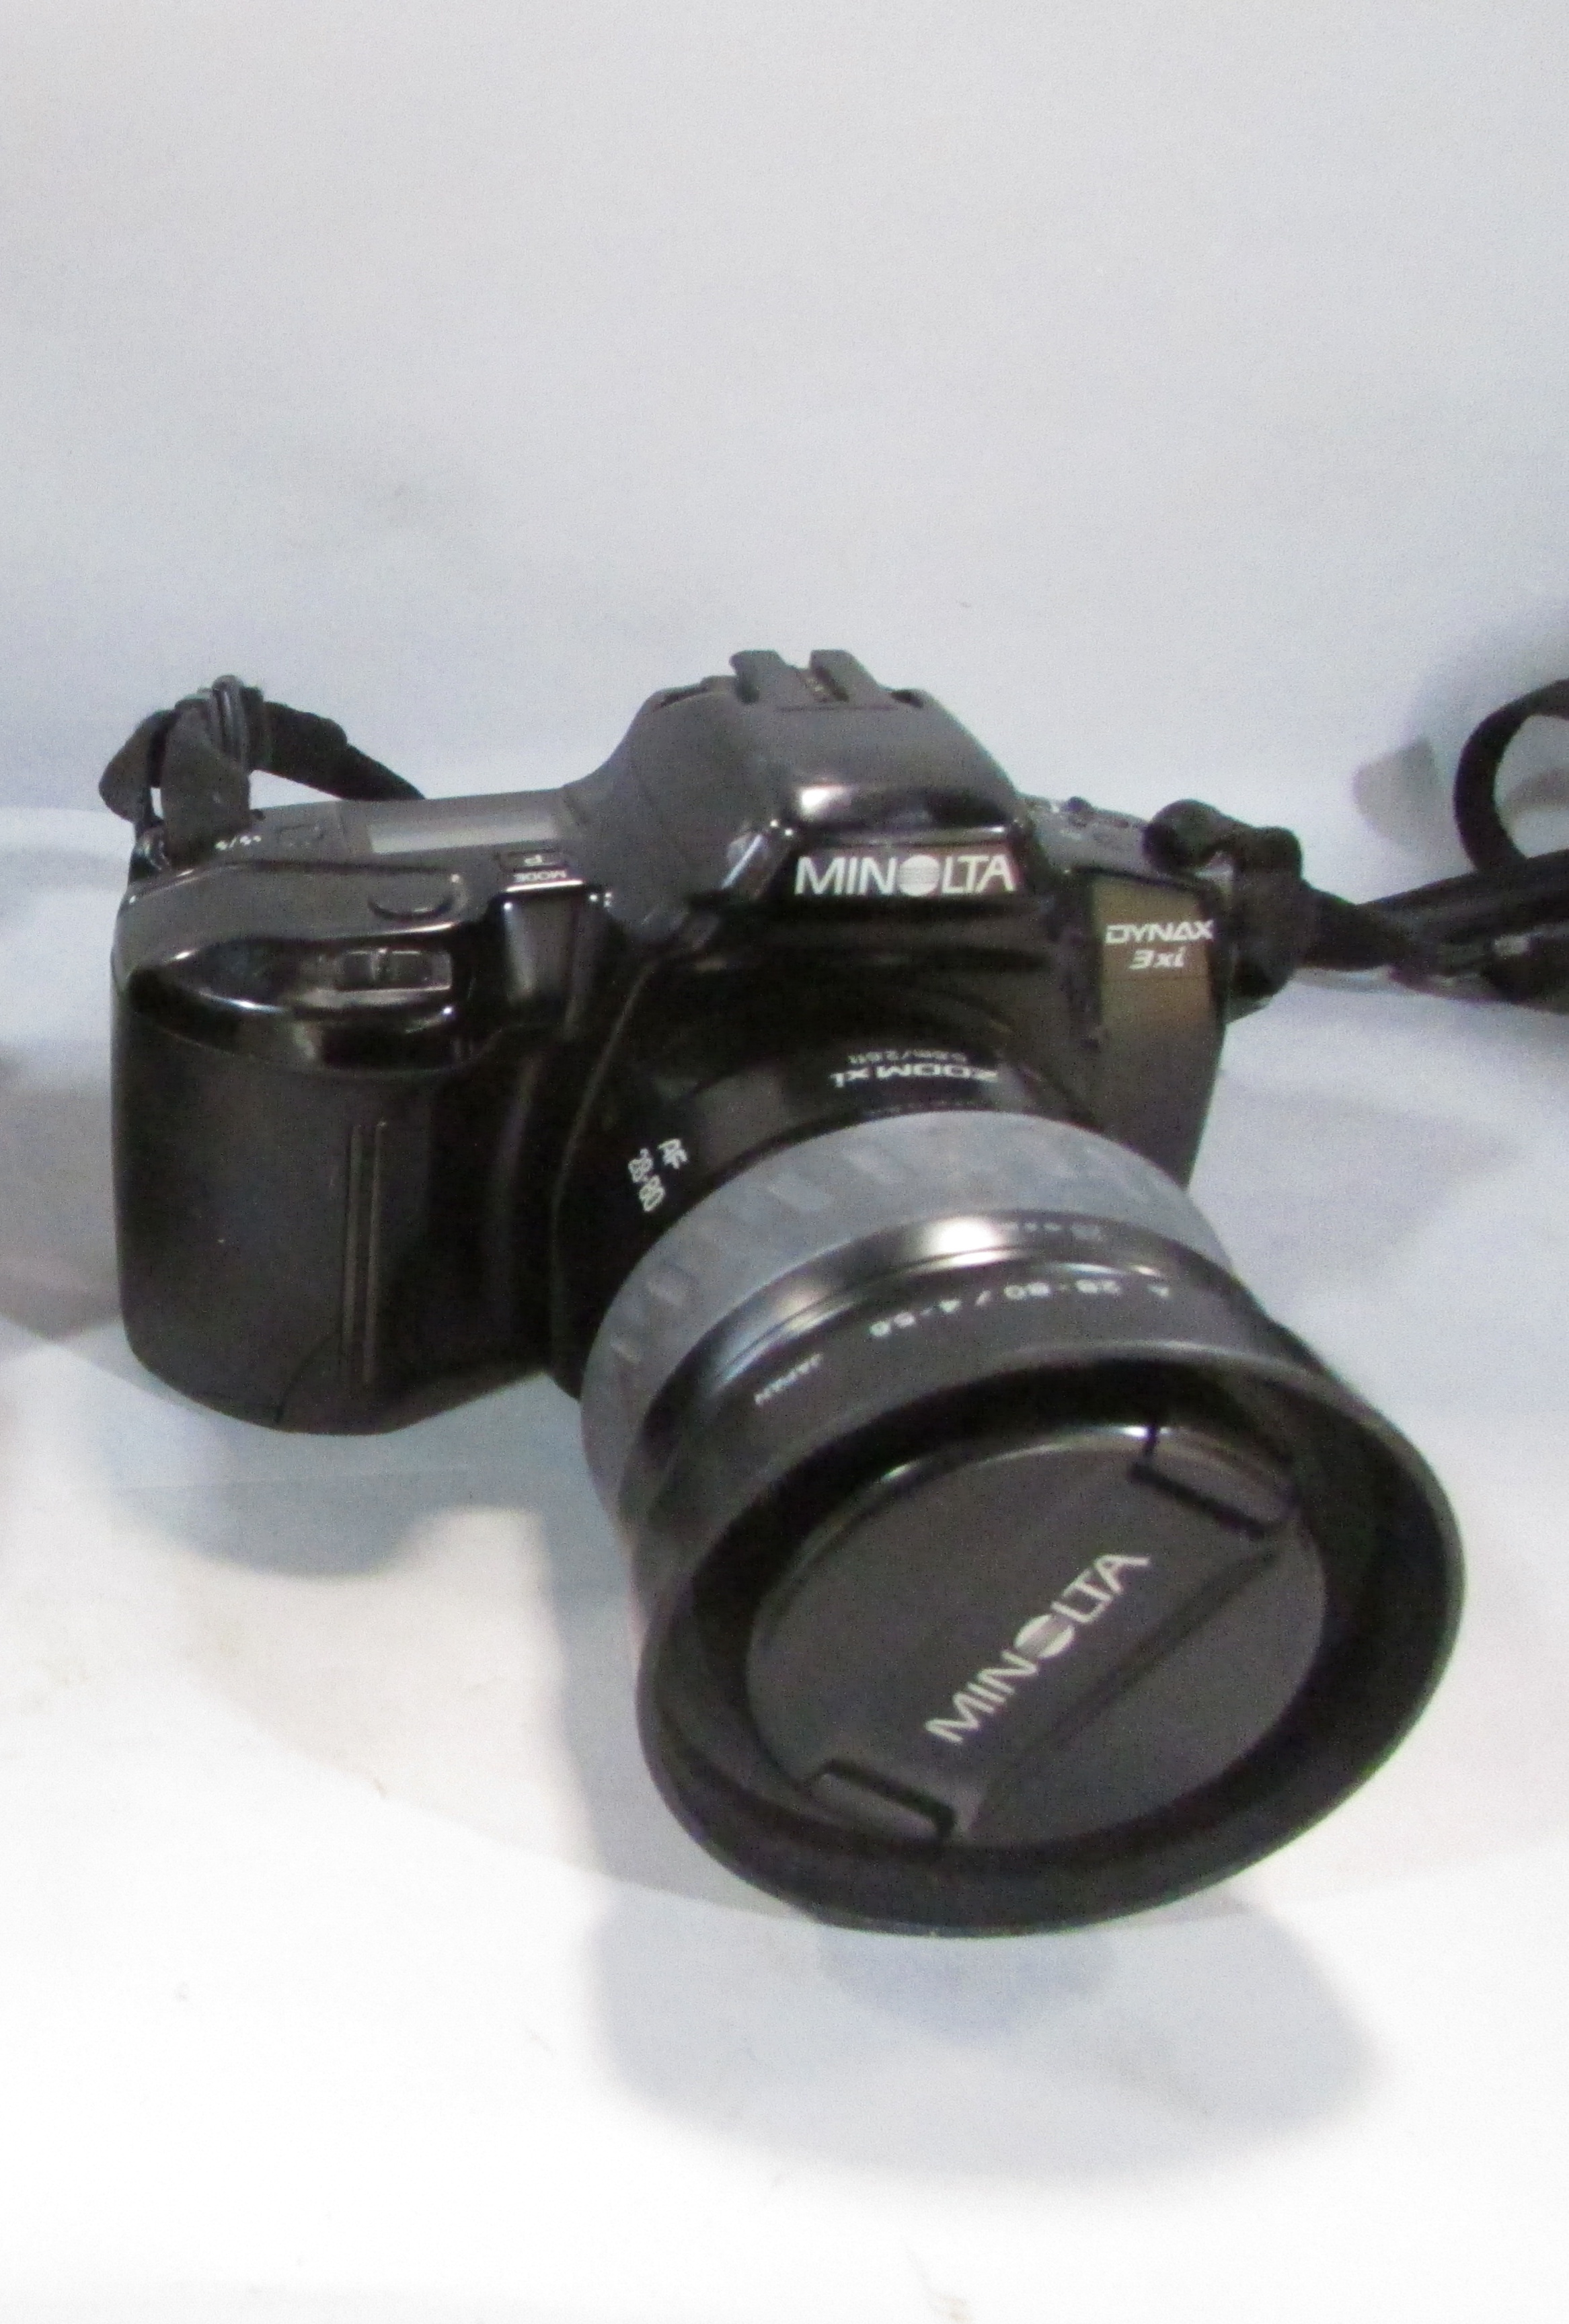 A quantity of photographic equipment including a Minolta 200 MXI camera, a Minolta flash and lens, - Image 7 of 7